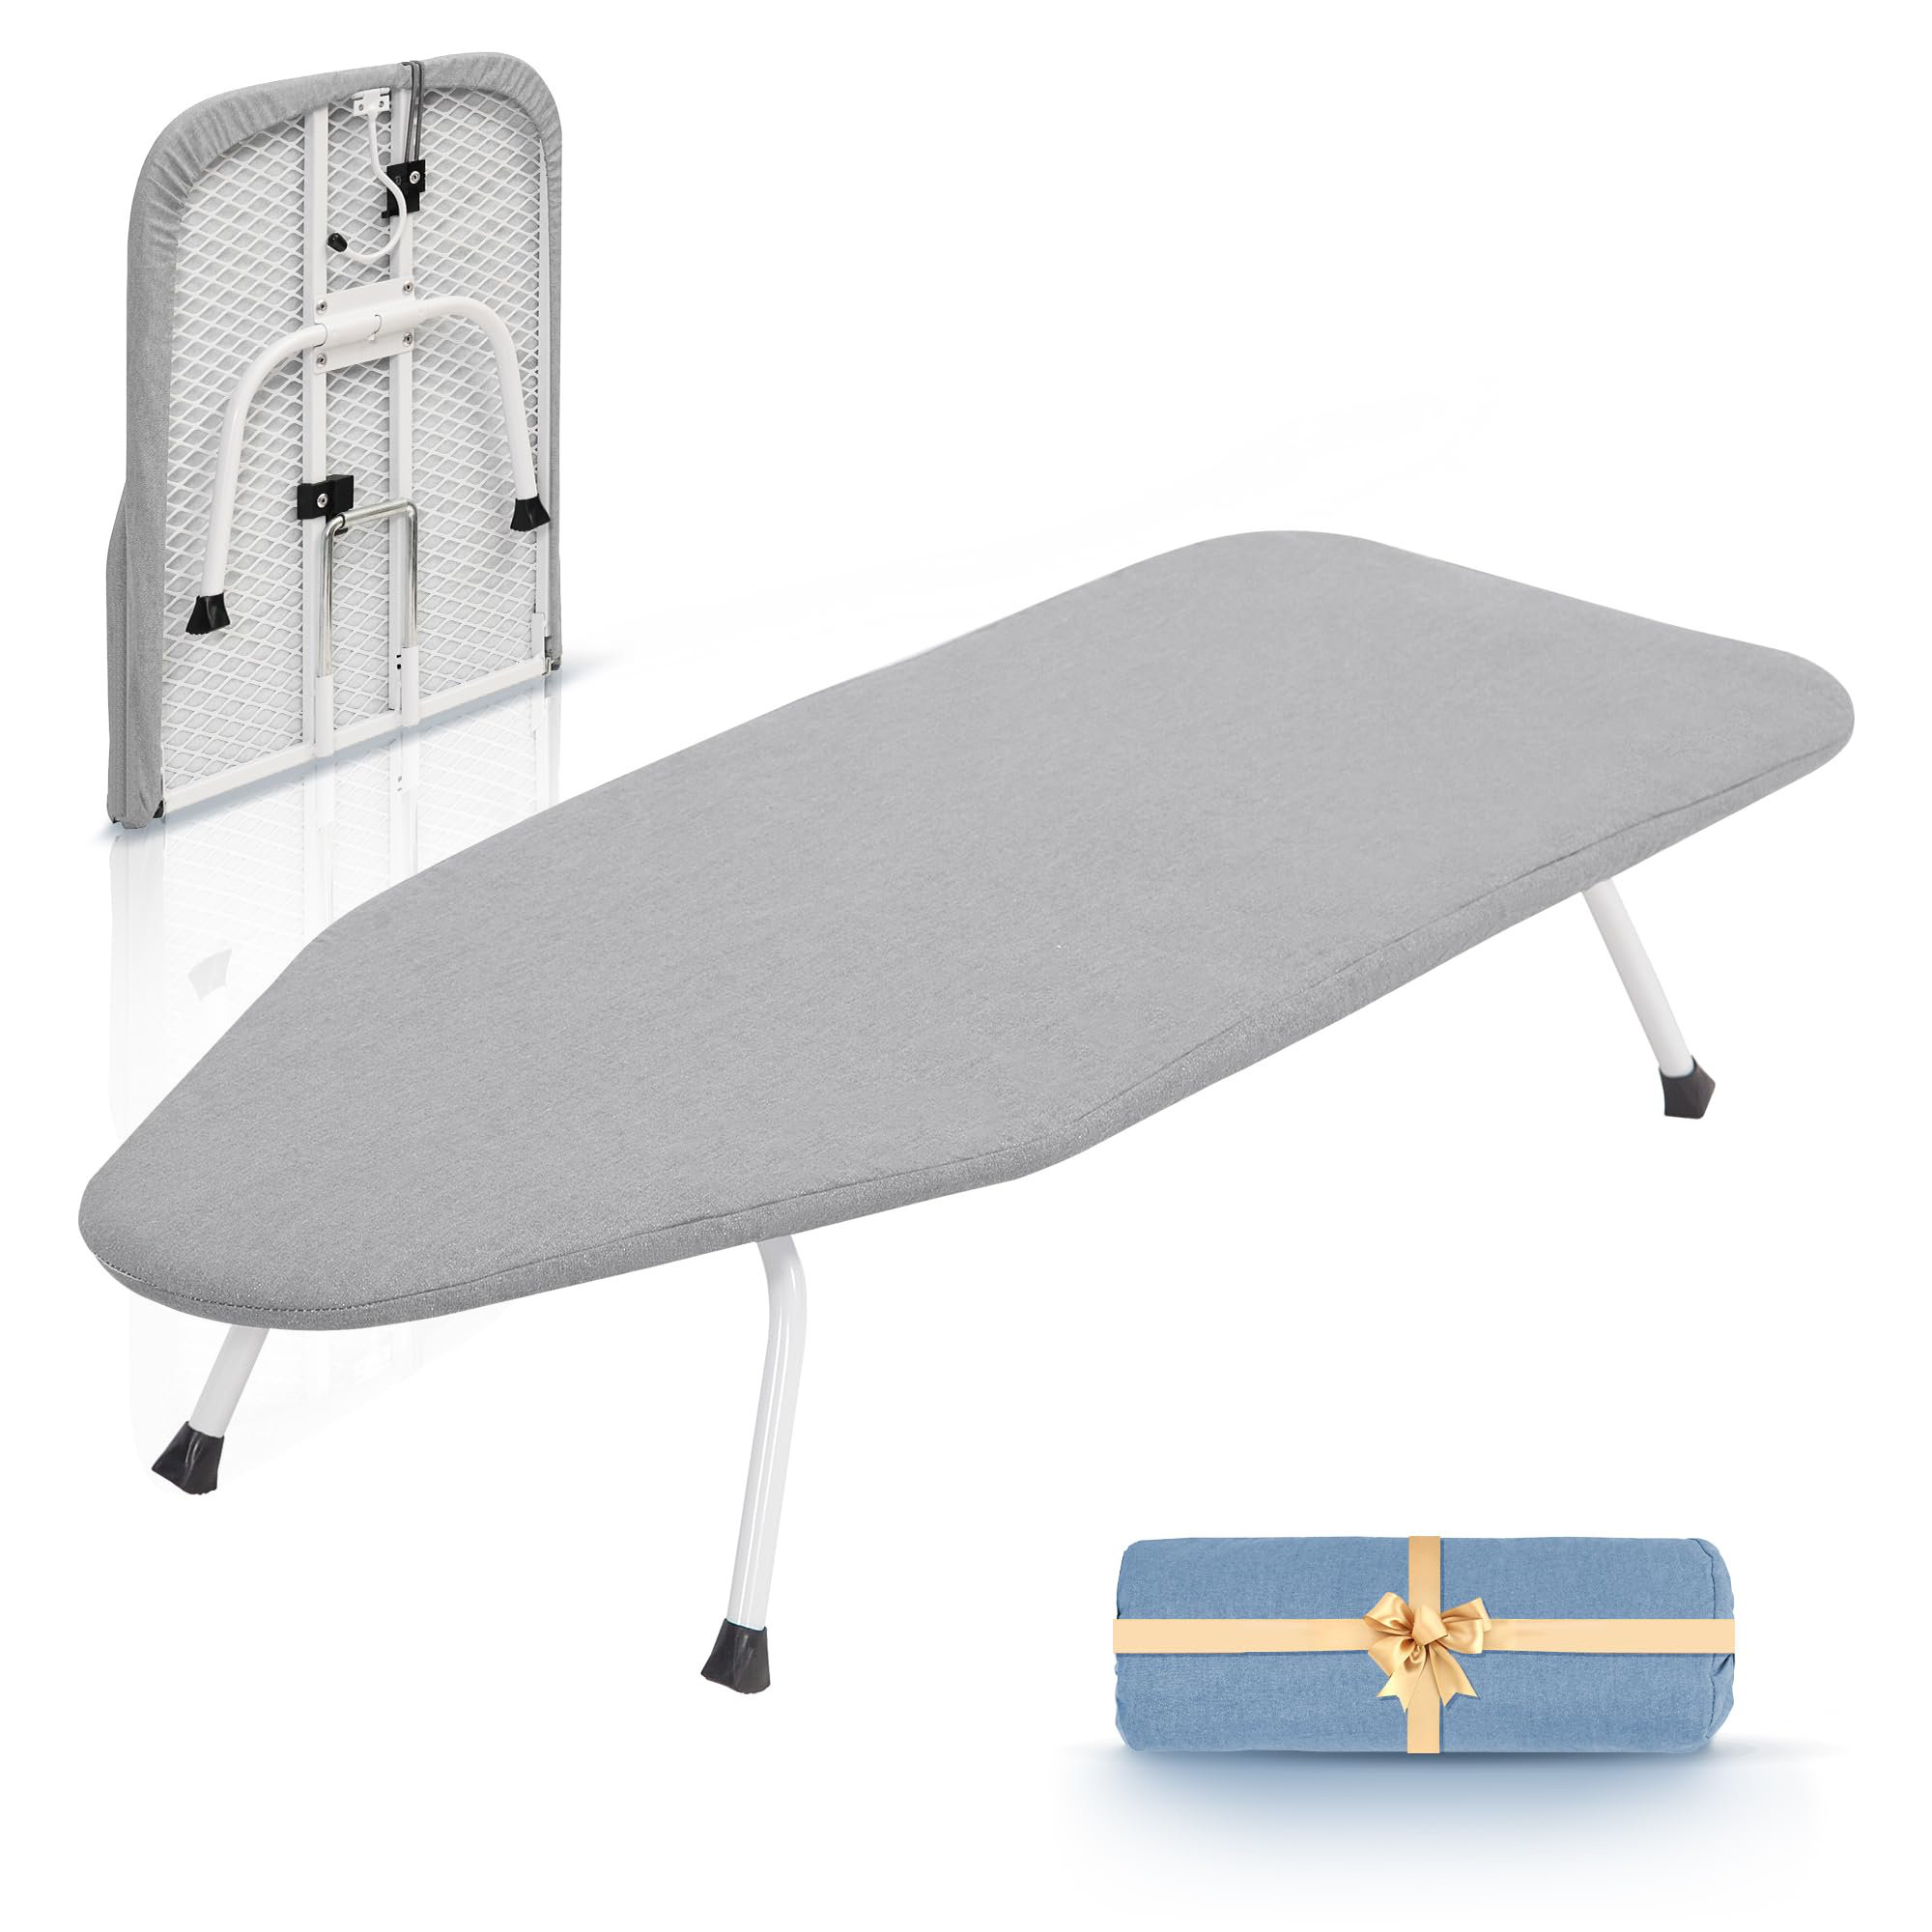 Metal Tabletop Ironing Board